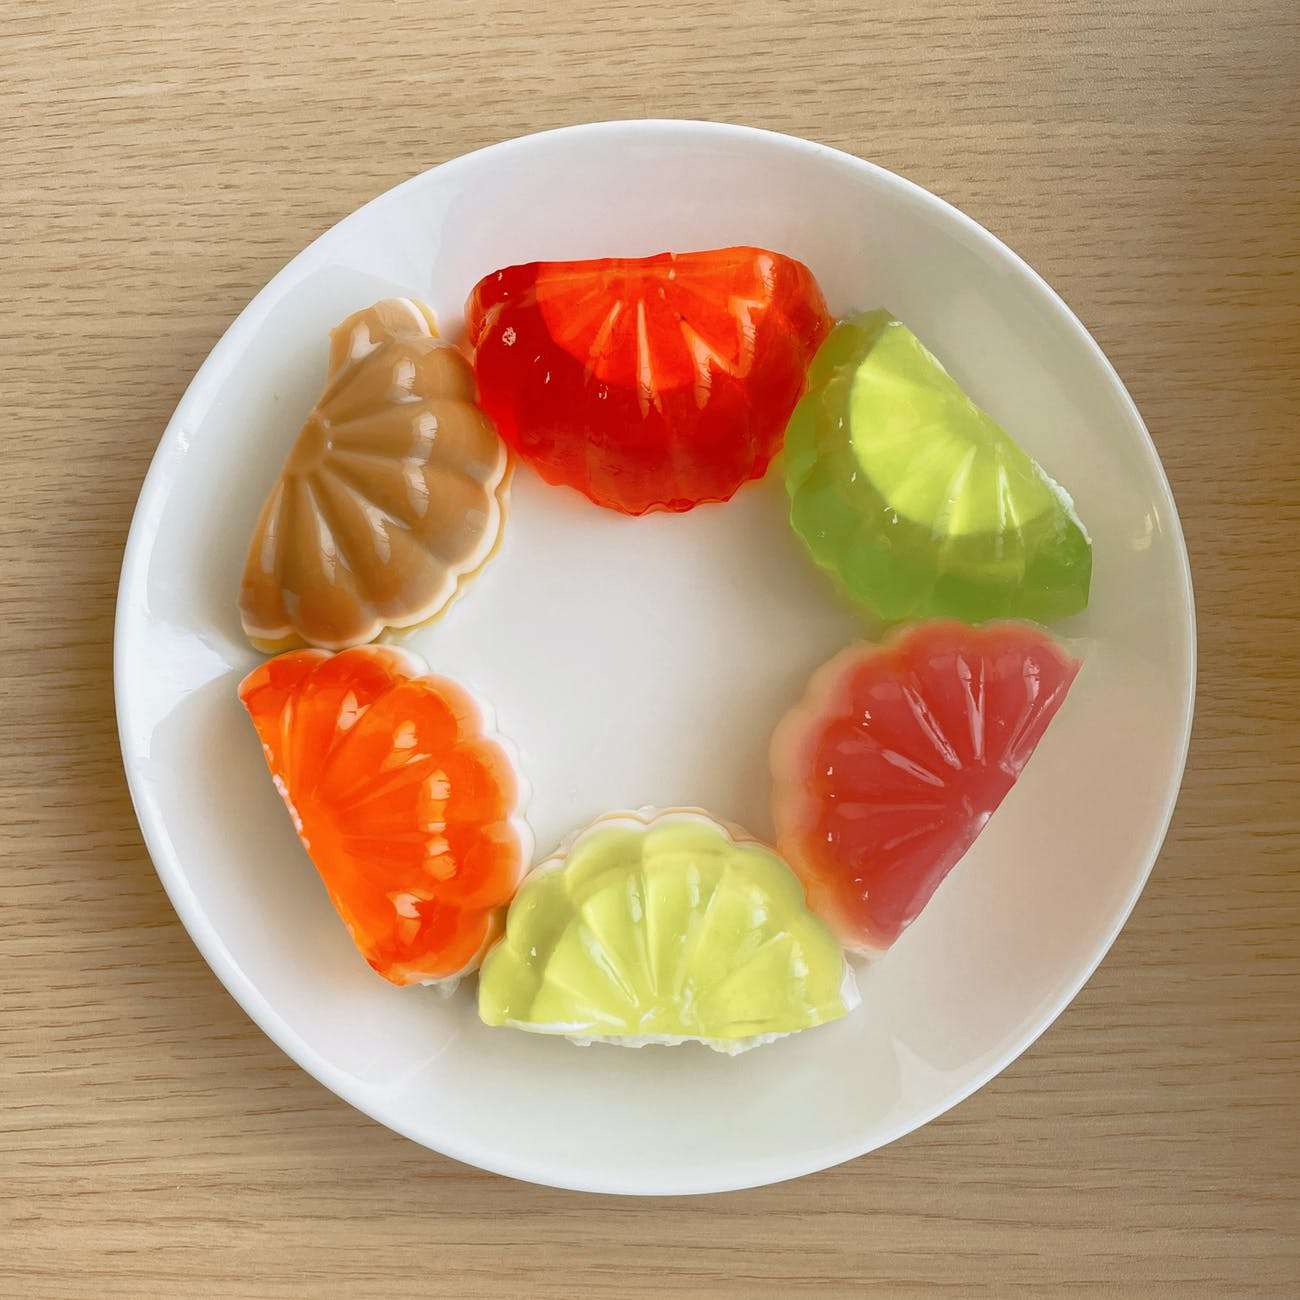 gelatin desserts in a plate